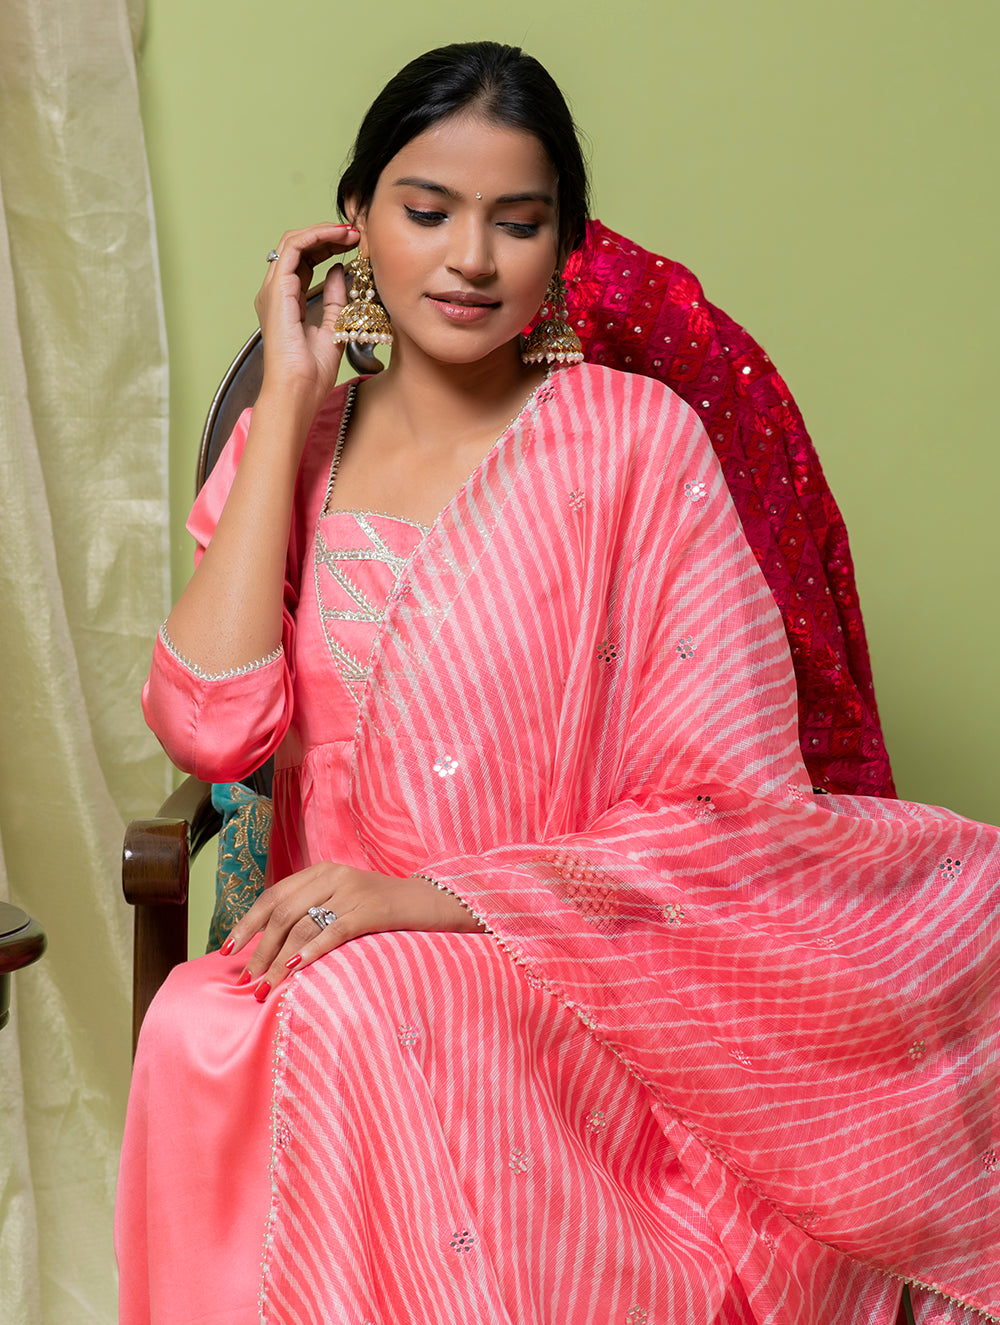 Load image into Gallery viewer, Occasion Wear. Modal Cotton Kurta Set With Lehariya &amp; Mirrorwork Dupatta - Deep Melon Pink &amp; Beige